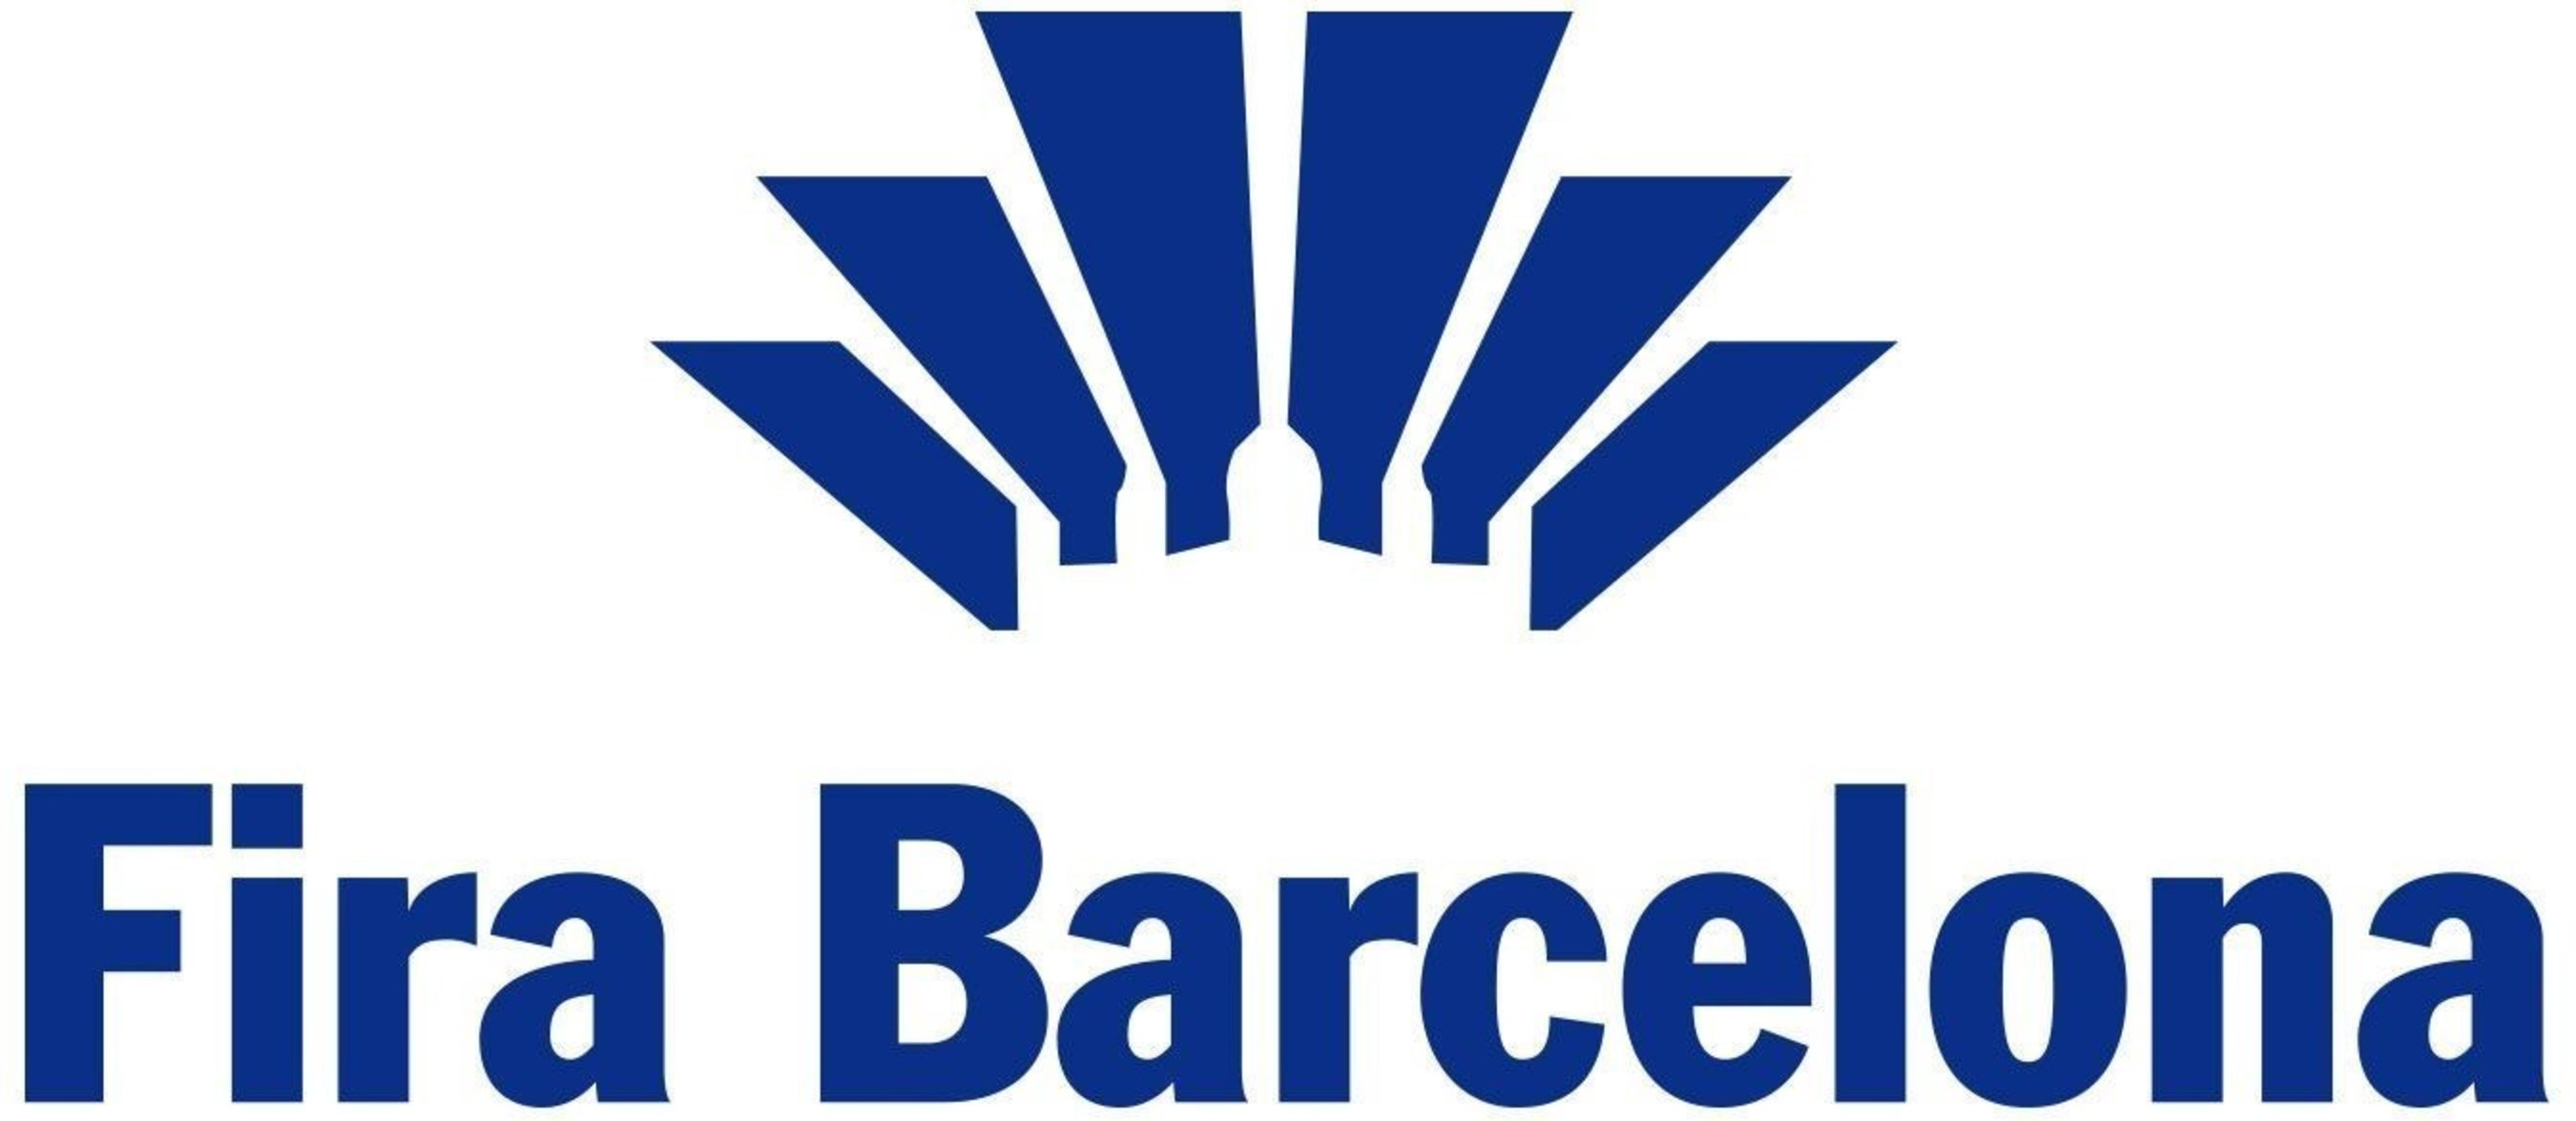 Fira de Barcelona Logo (PRNewsFoto/Fira de Barcelona)